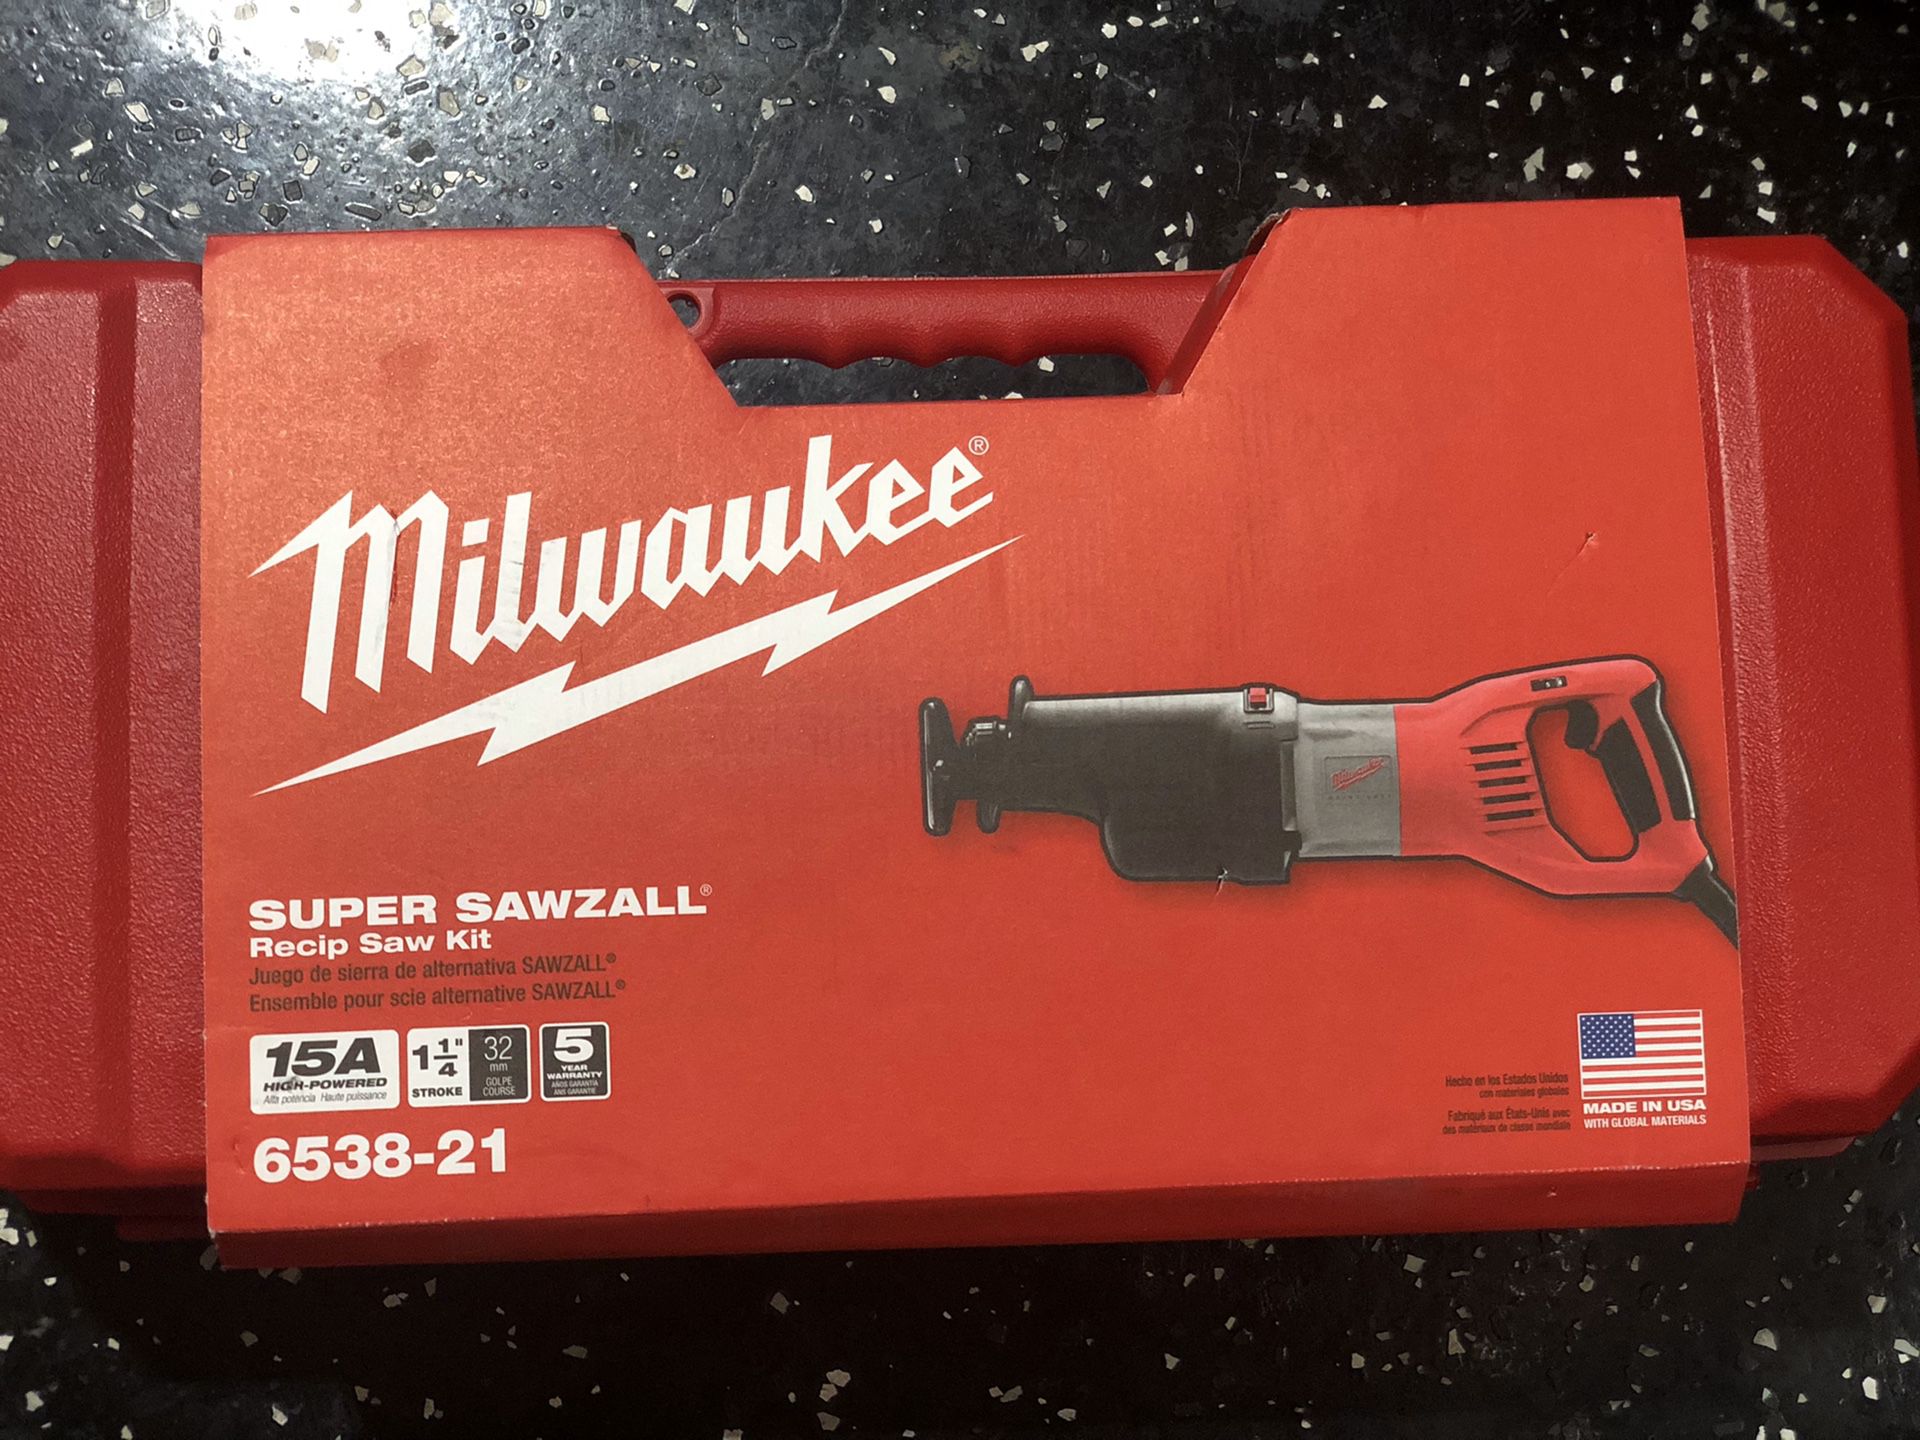 Milwaukee 15 Amp 1-1/4 in. Stroke Orbital SUPER SAWZALL Reciprocating Saw with Hard Case- Brand New